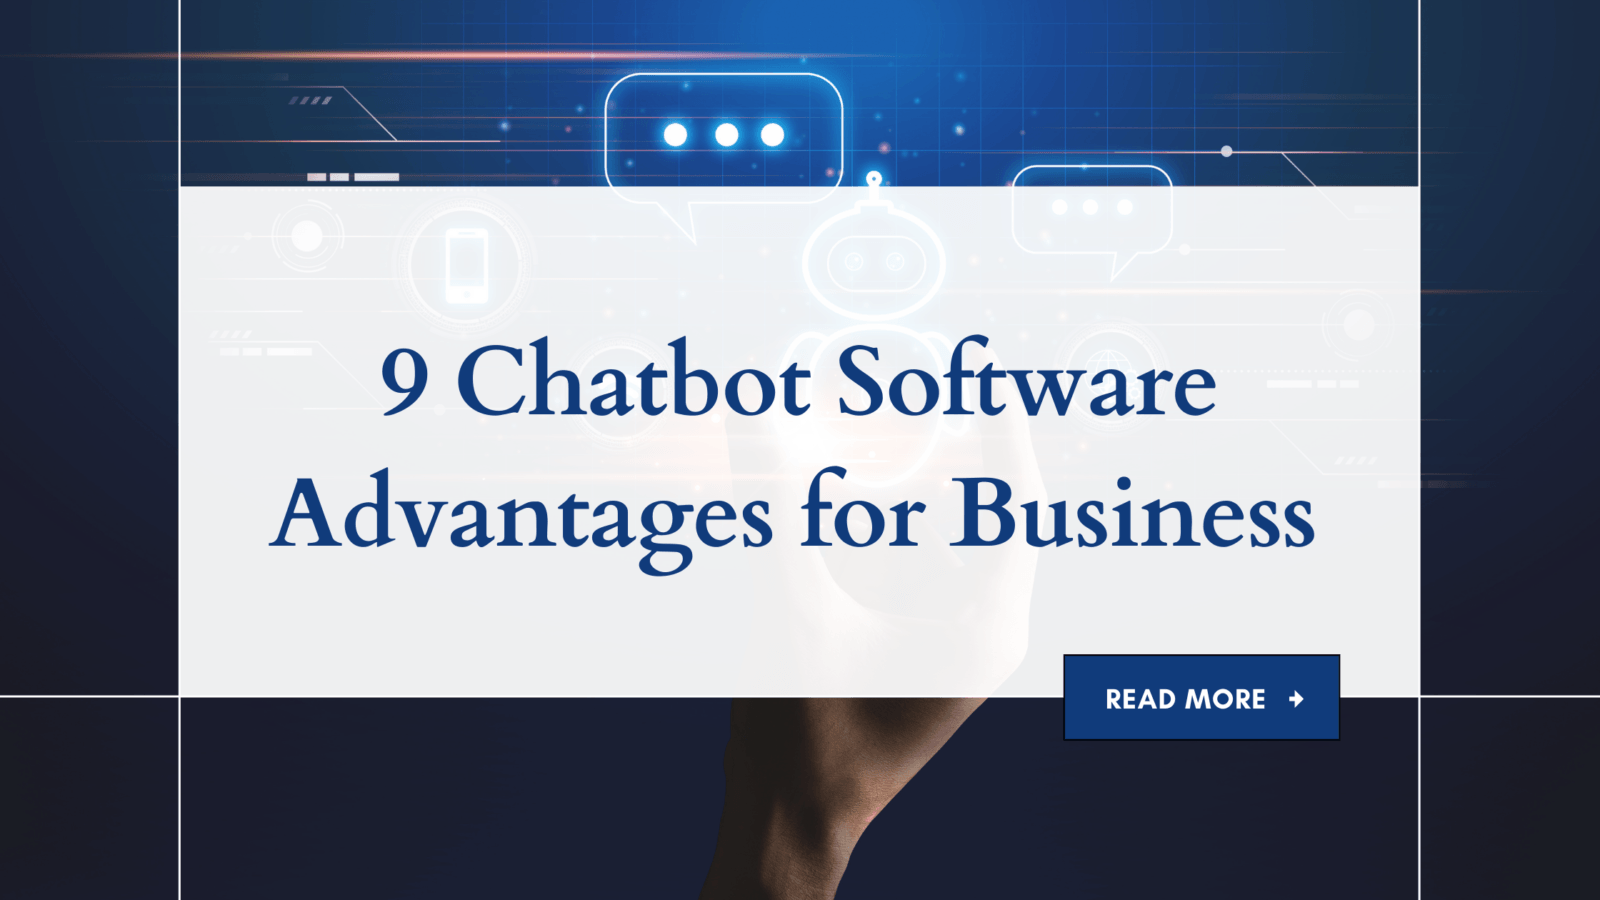 9 Chatbot Software Advantages for Business